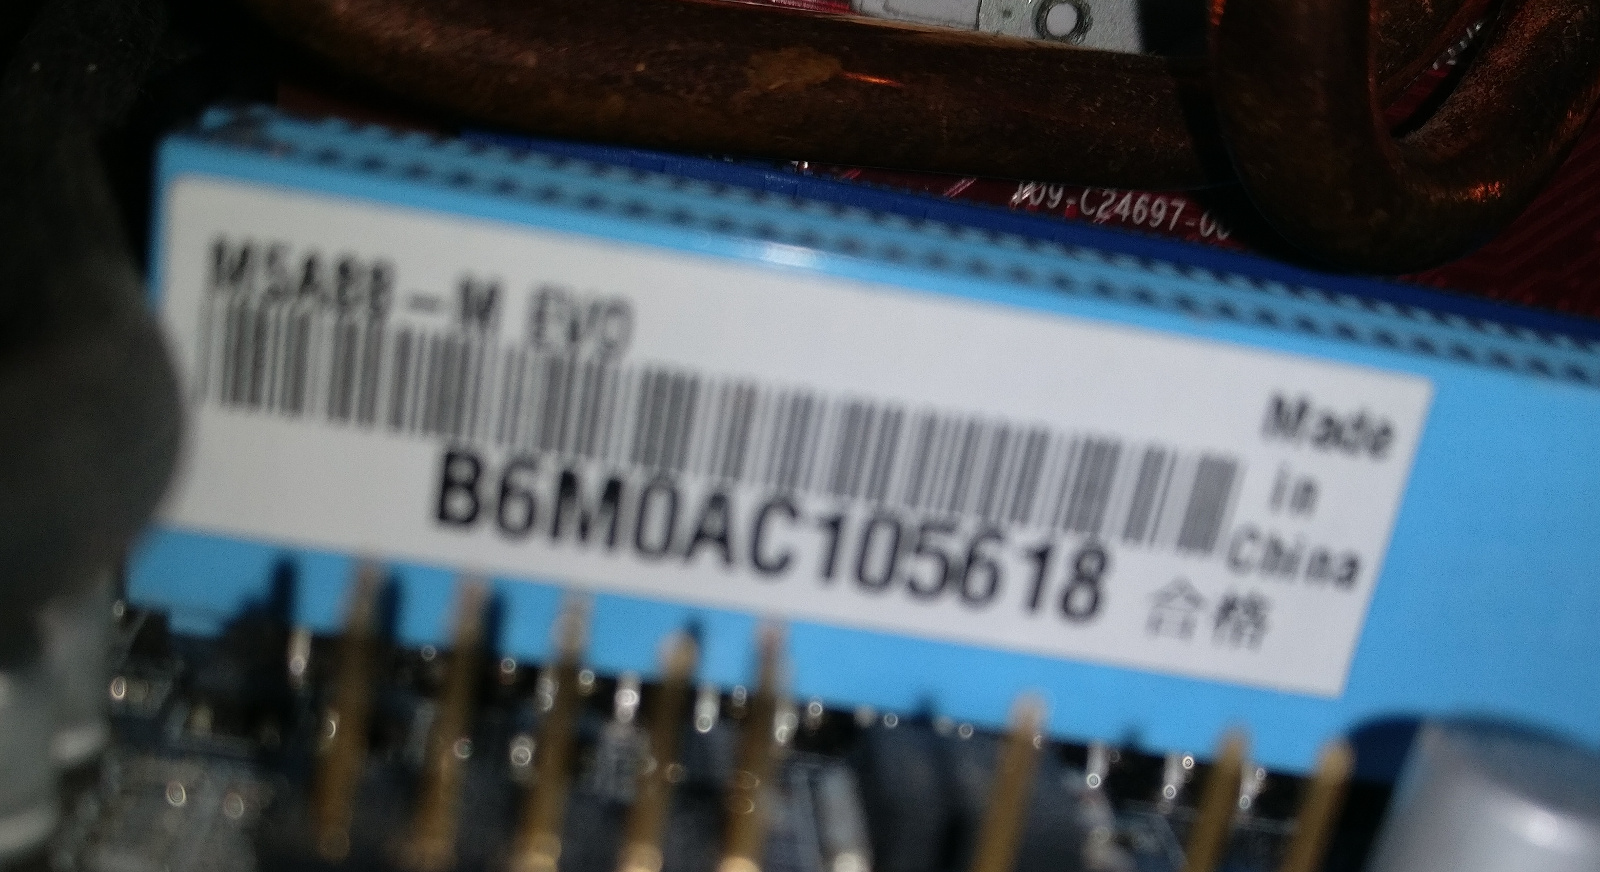 M5A88M-EVO_board_sticker_resized.jpg